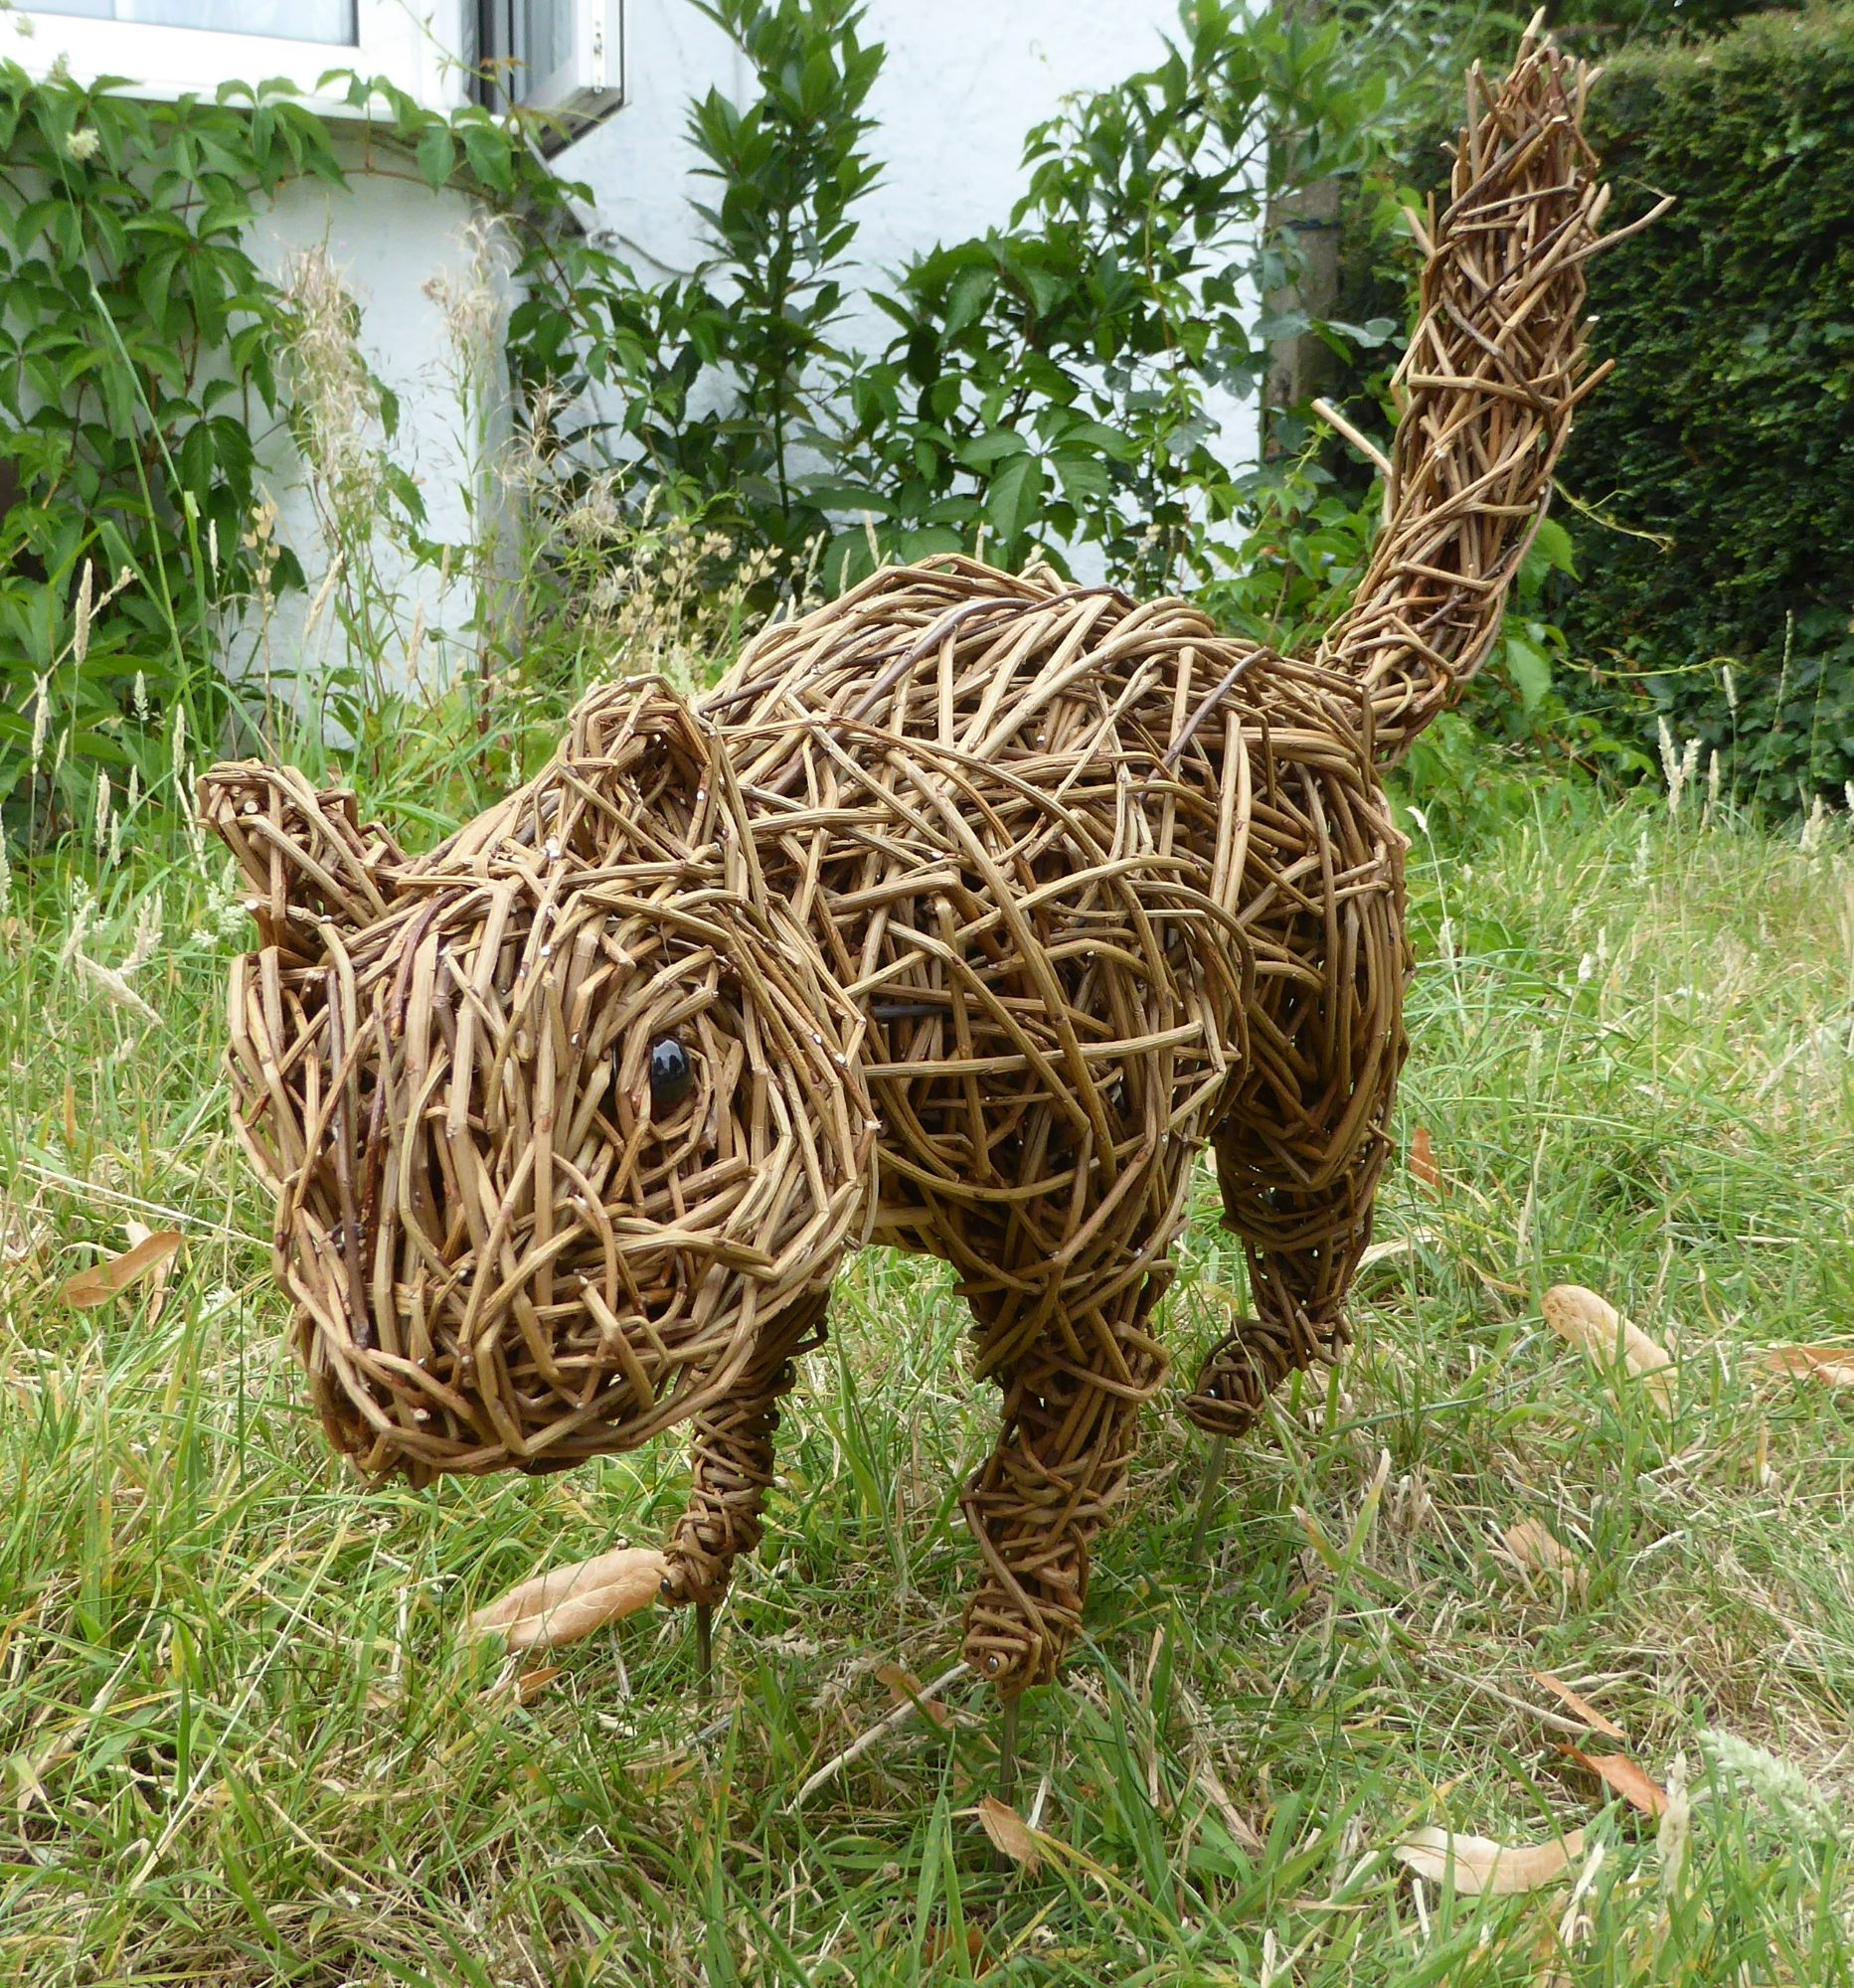 wilow squirrel sculpture standing on grass facing forward